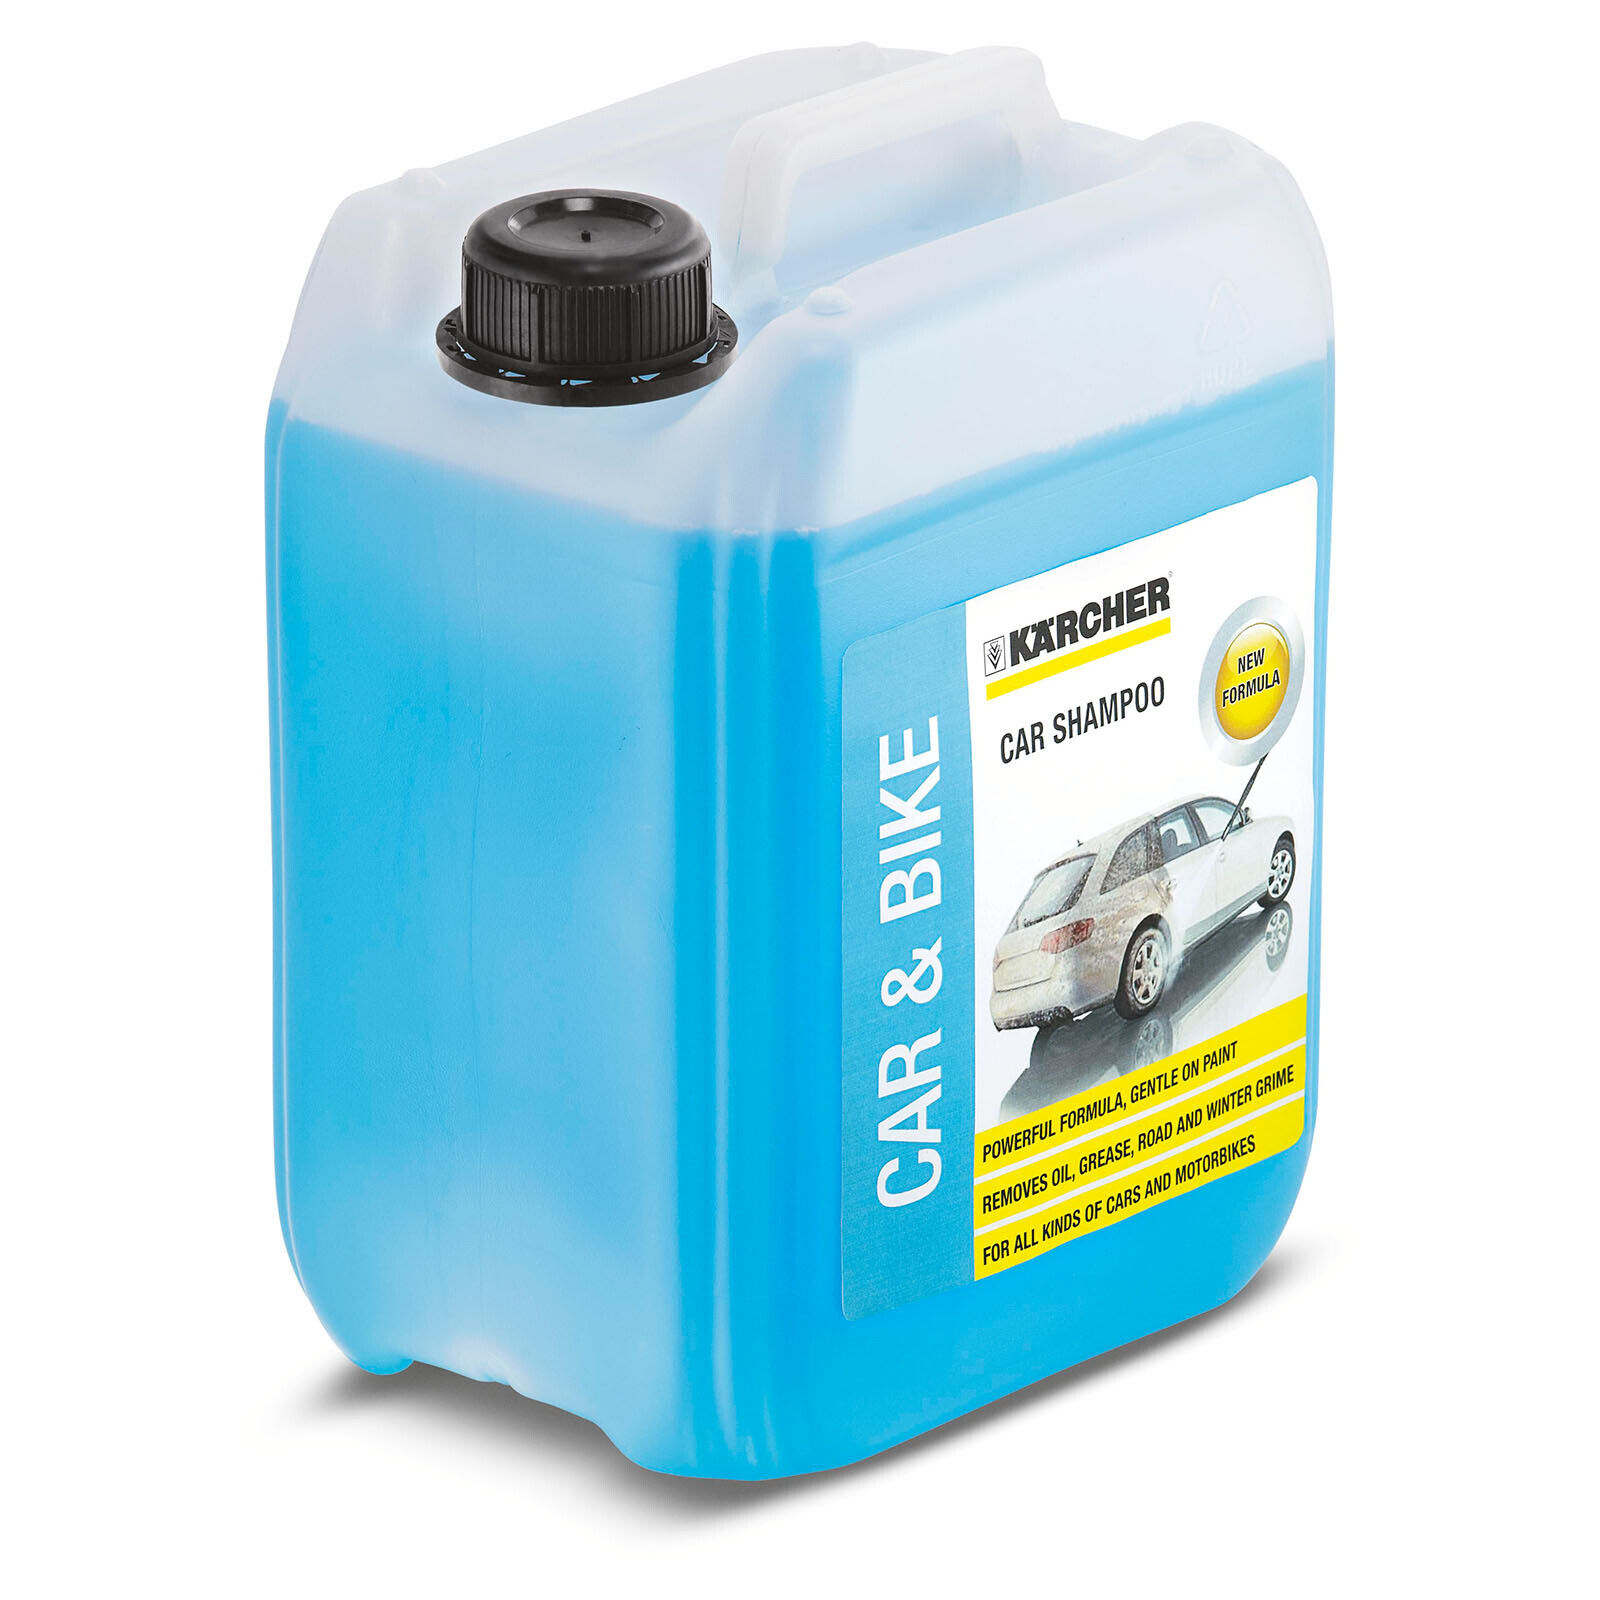 Karcher 5L Car Shampoo Automotive Care Supplies Car Wash Cleaning Products